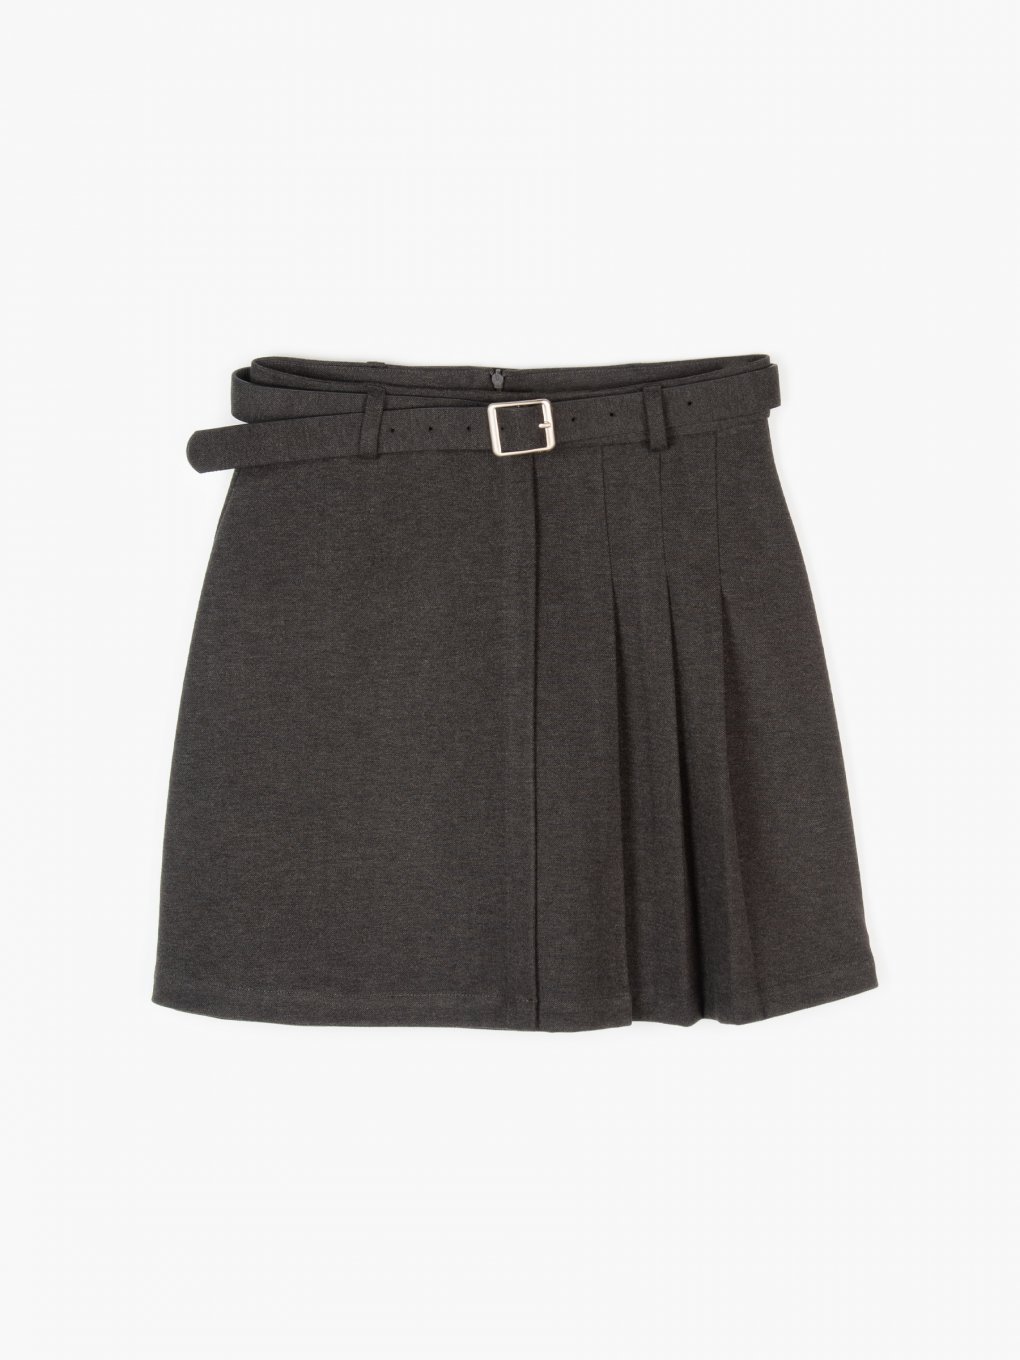 Mini skirt with belt